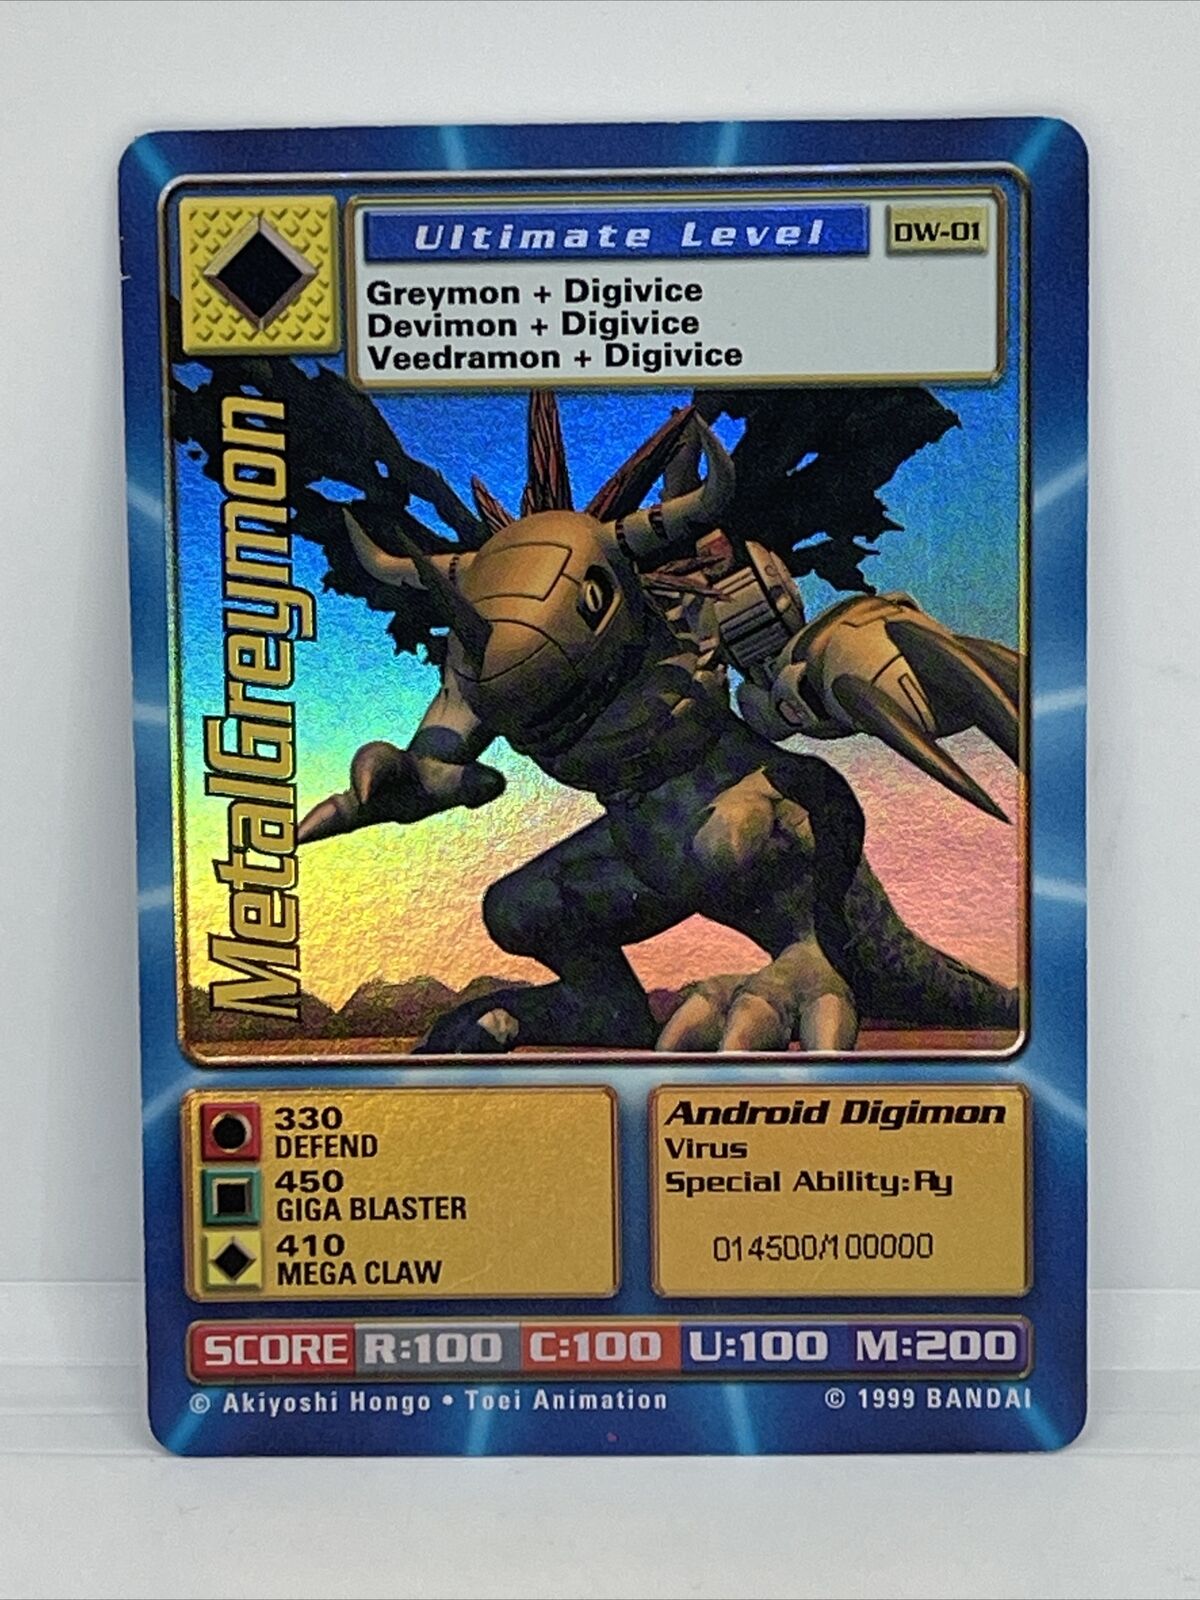 Digimon World PlayStation Promo DW-01 MetalGreymon - number 014500 / 100,000